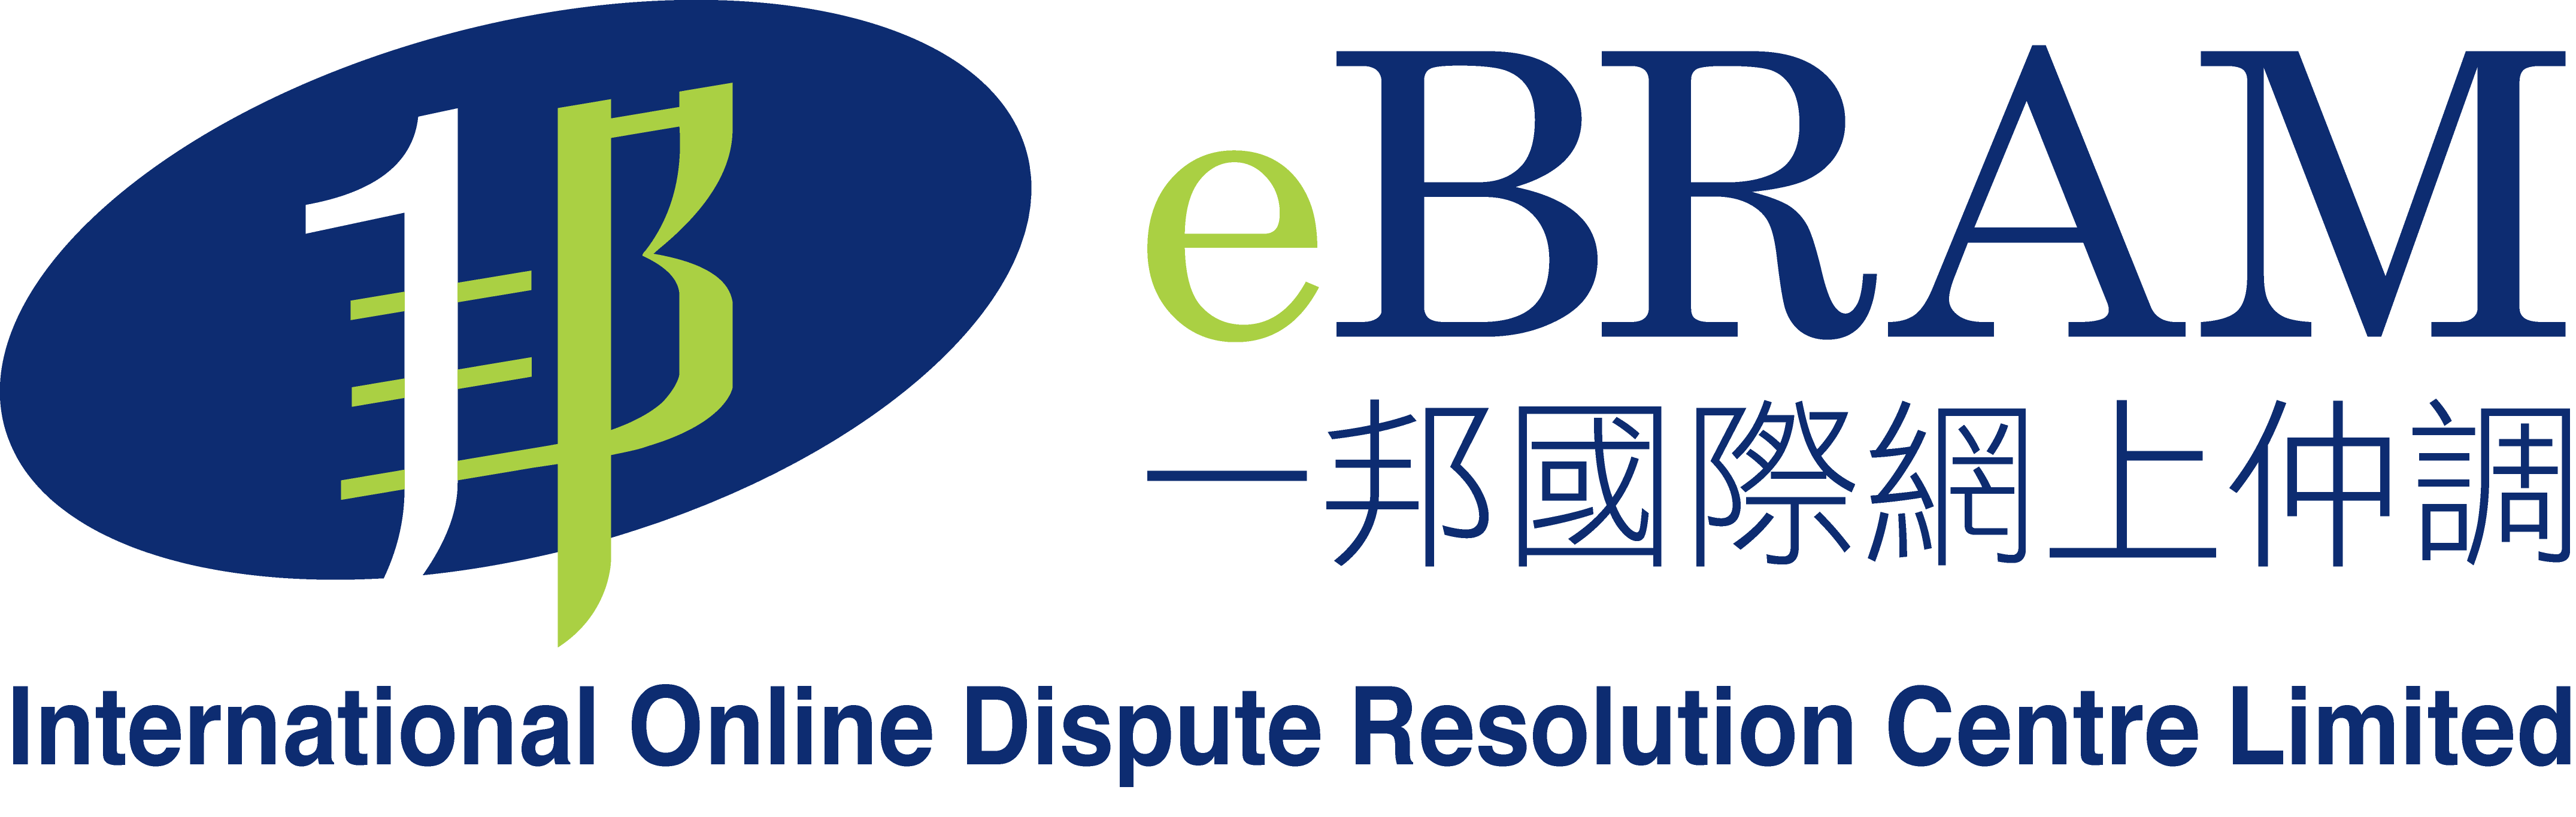 eBRAM International Online Dispute Resolution Centre Limited